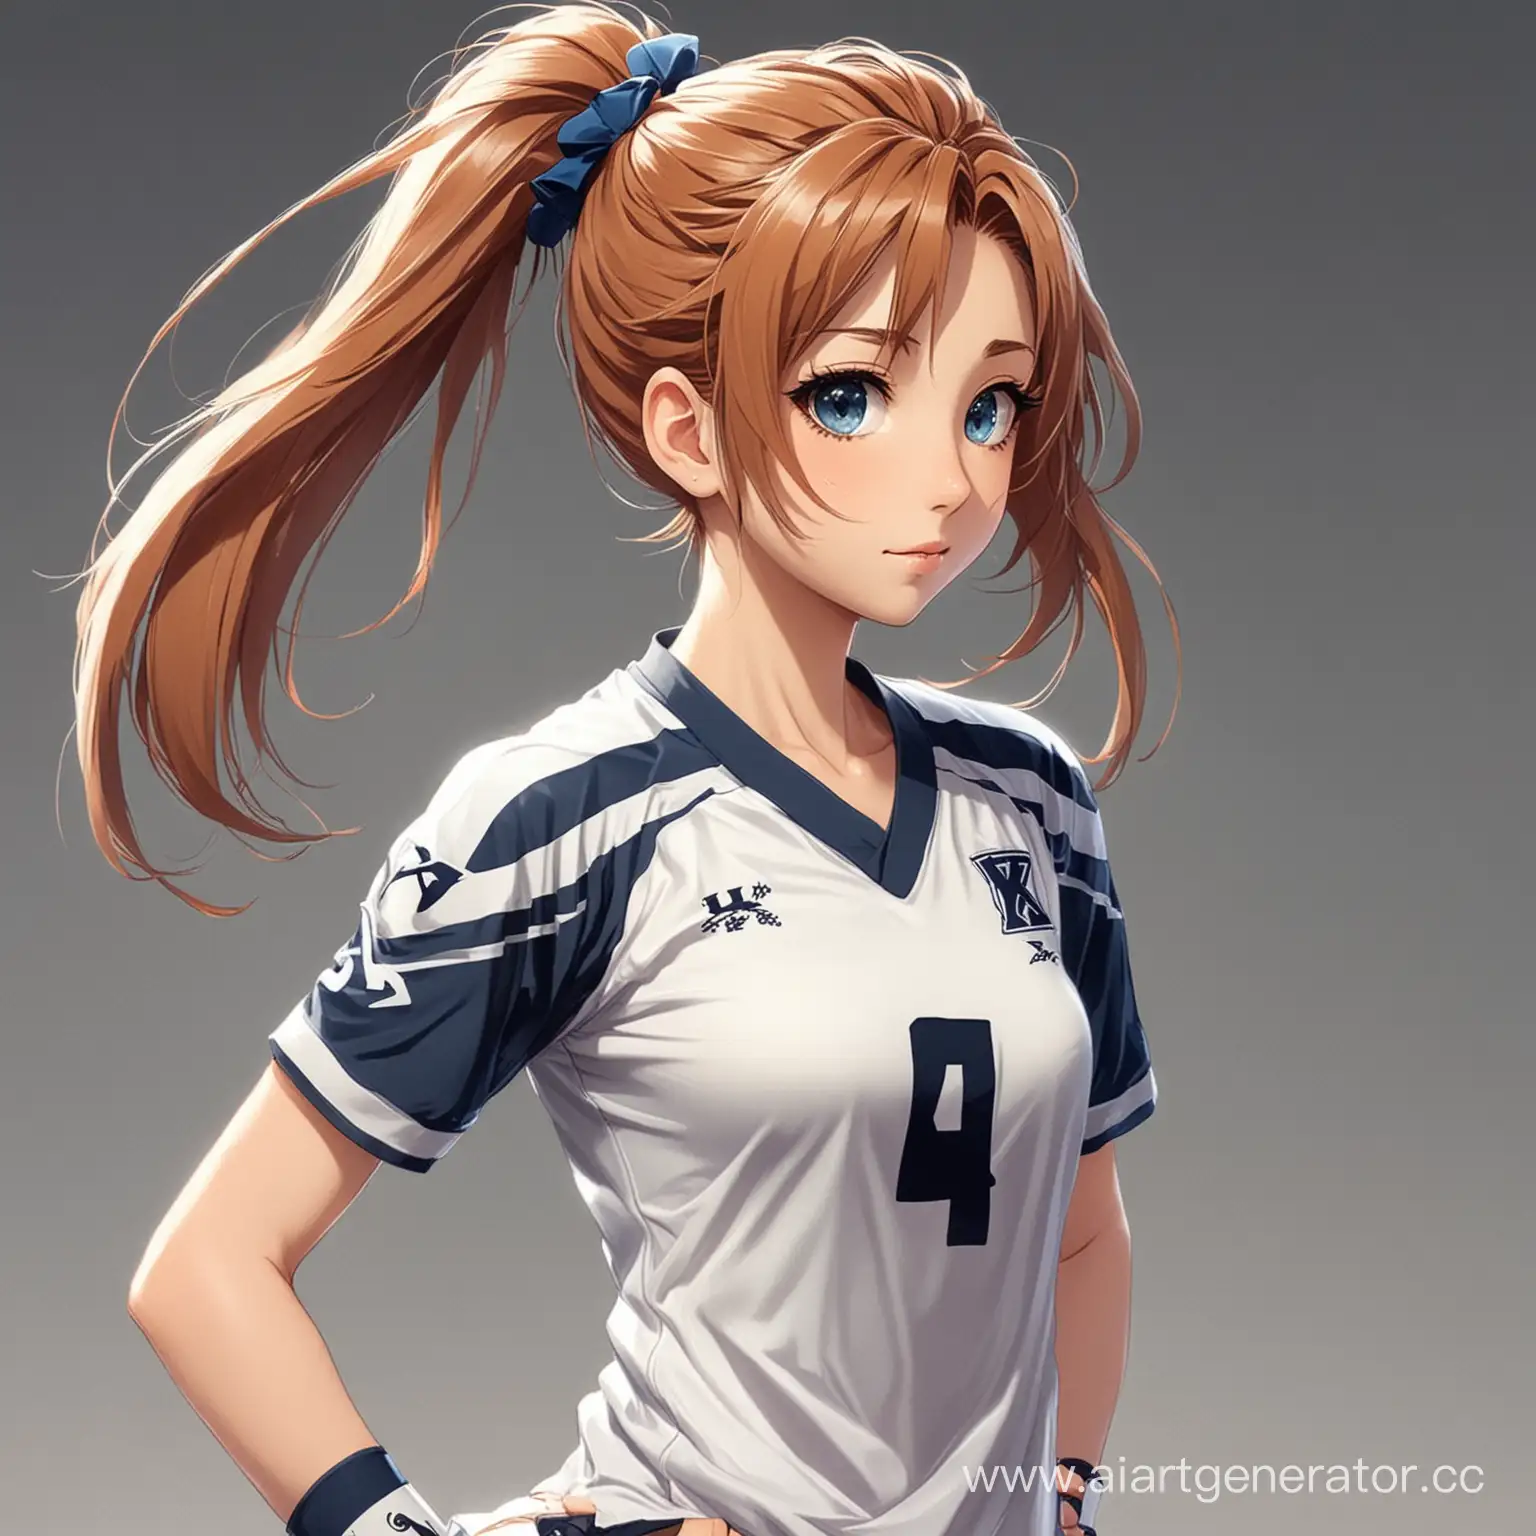 Anime-Girl-Kappa-Football-Player-in-Action